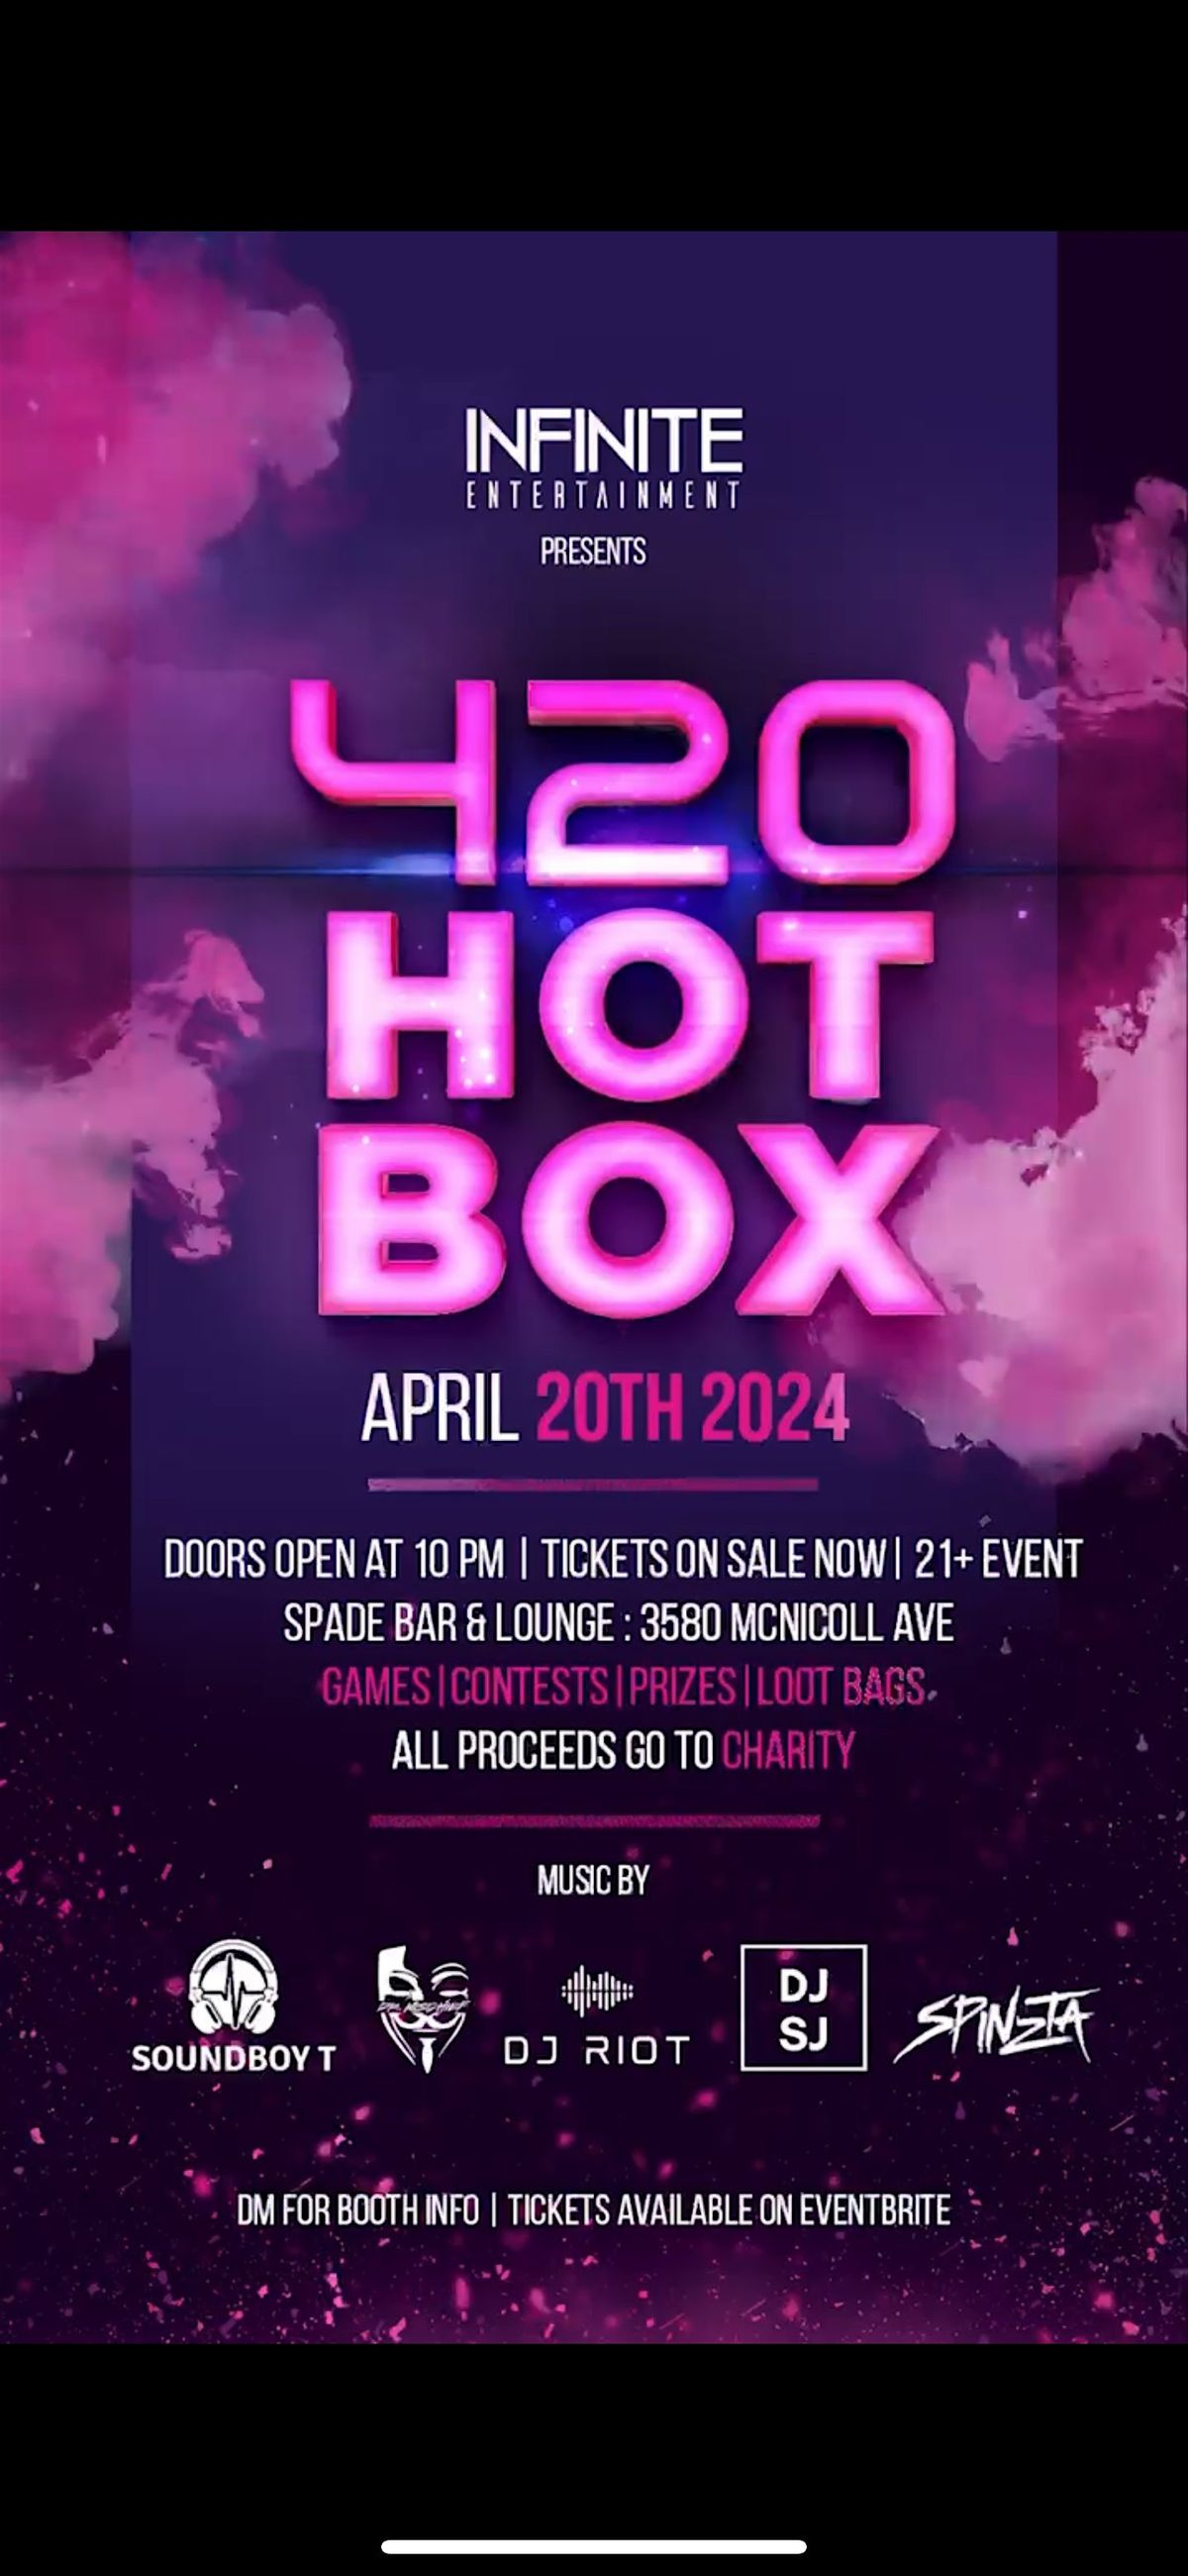 INFINITE Entertainment presents: 420 HOT BOX